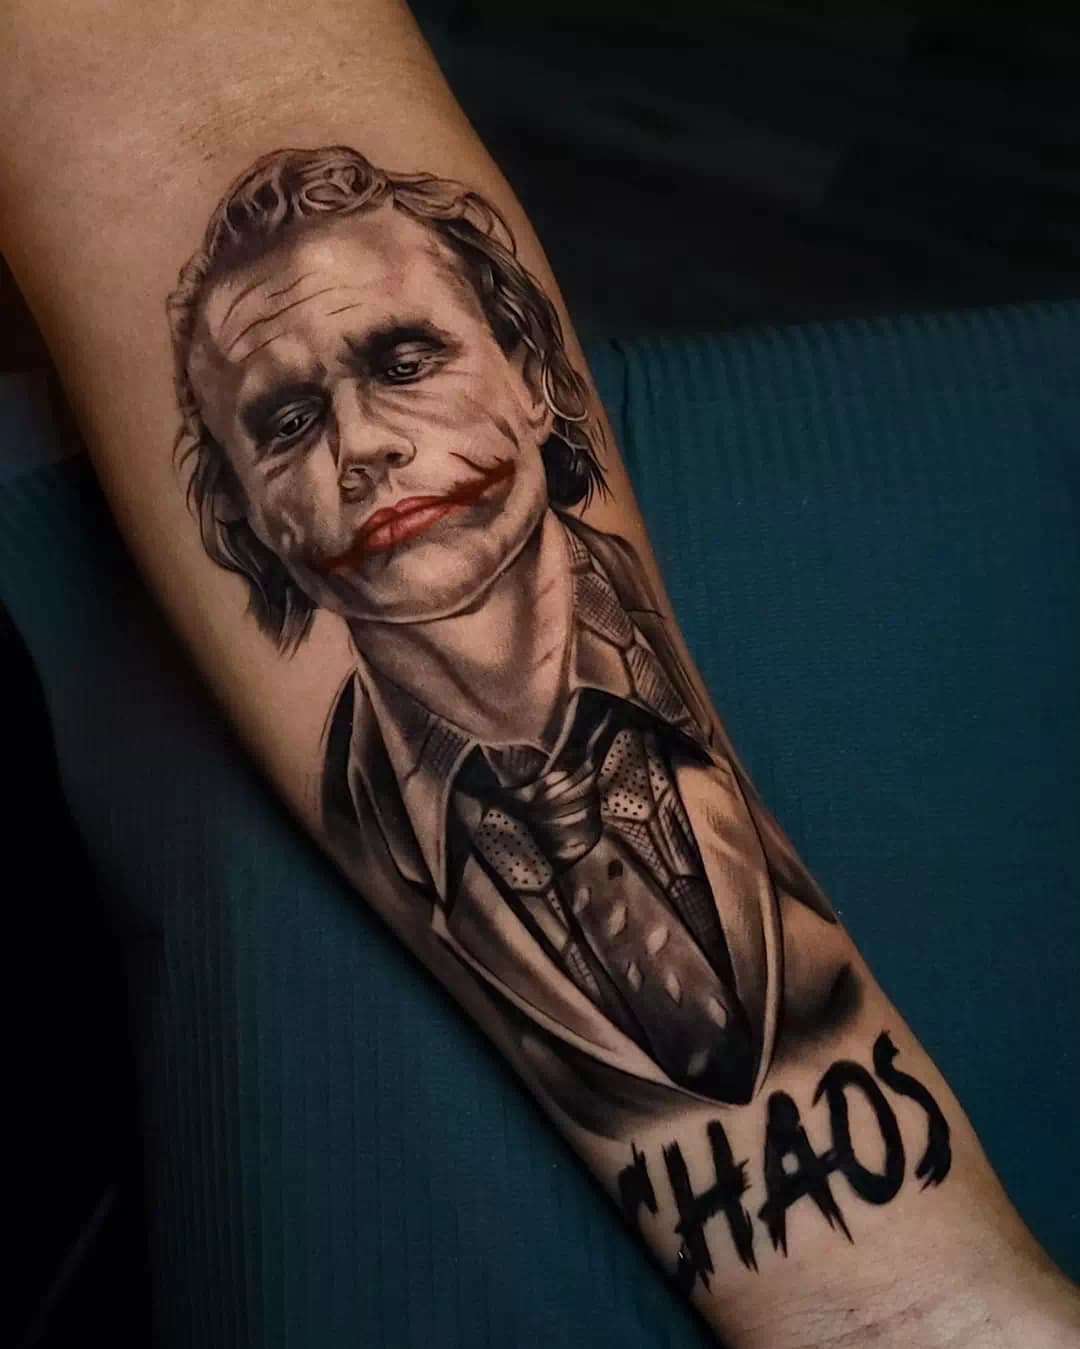 Tatuaje del Joker de Heath Ledger 3